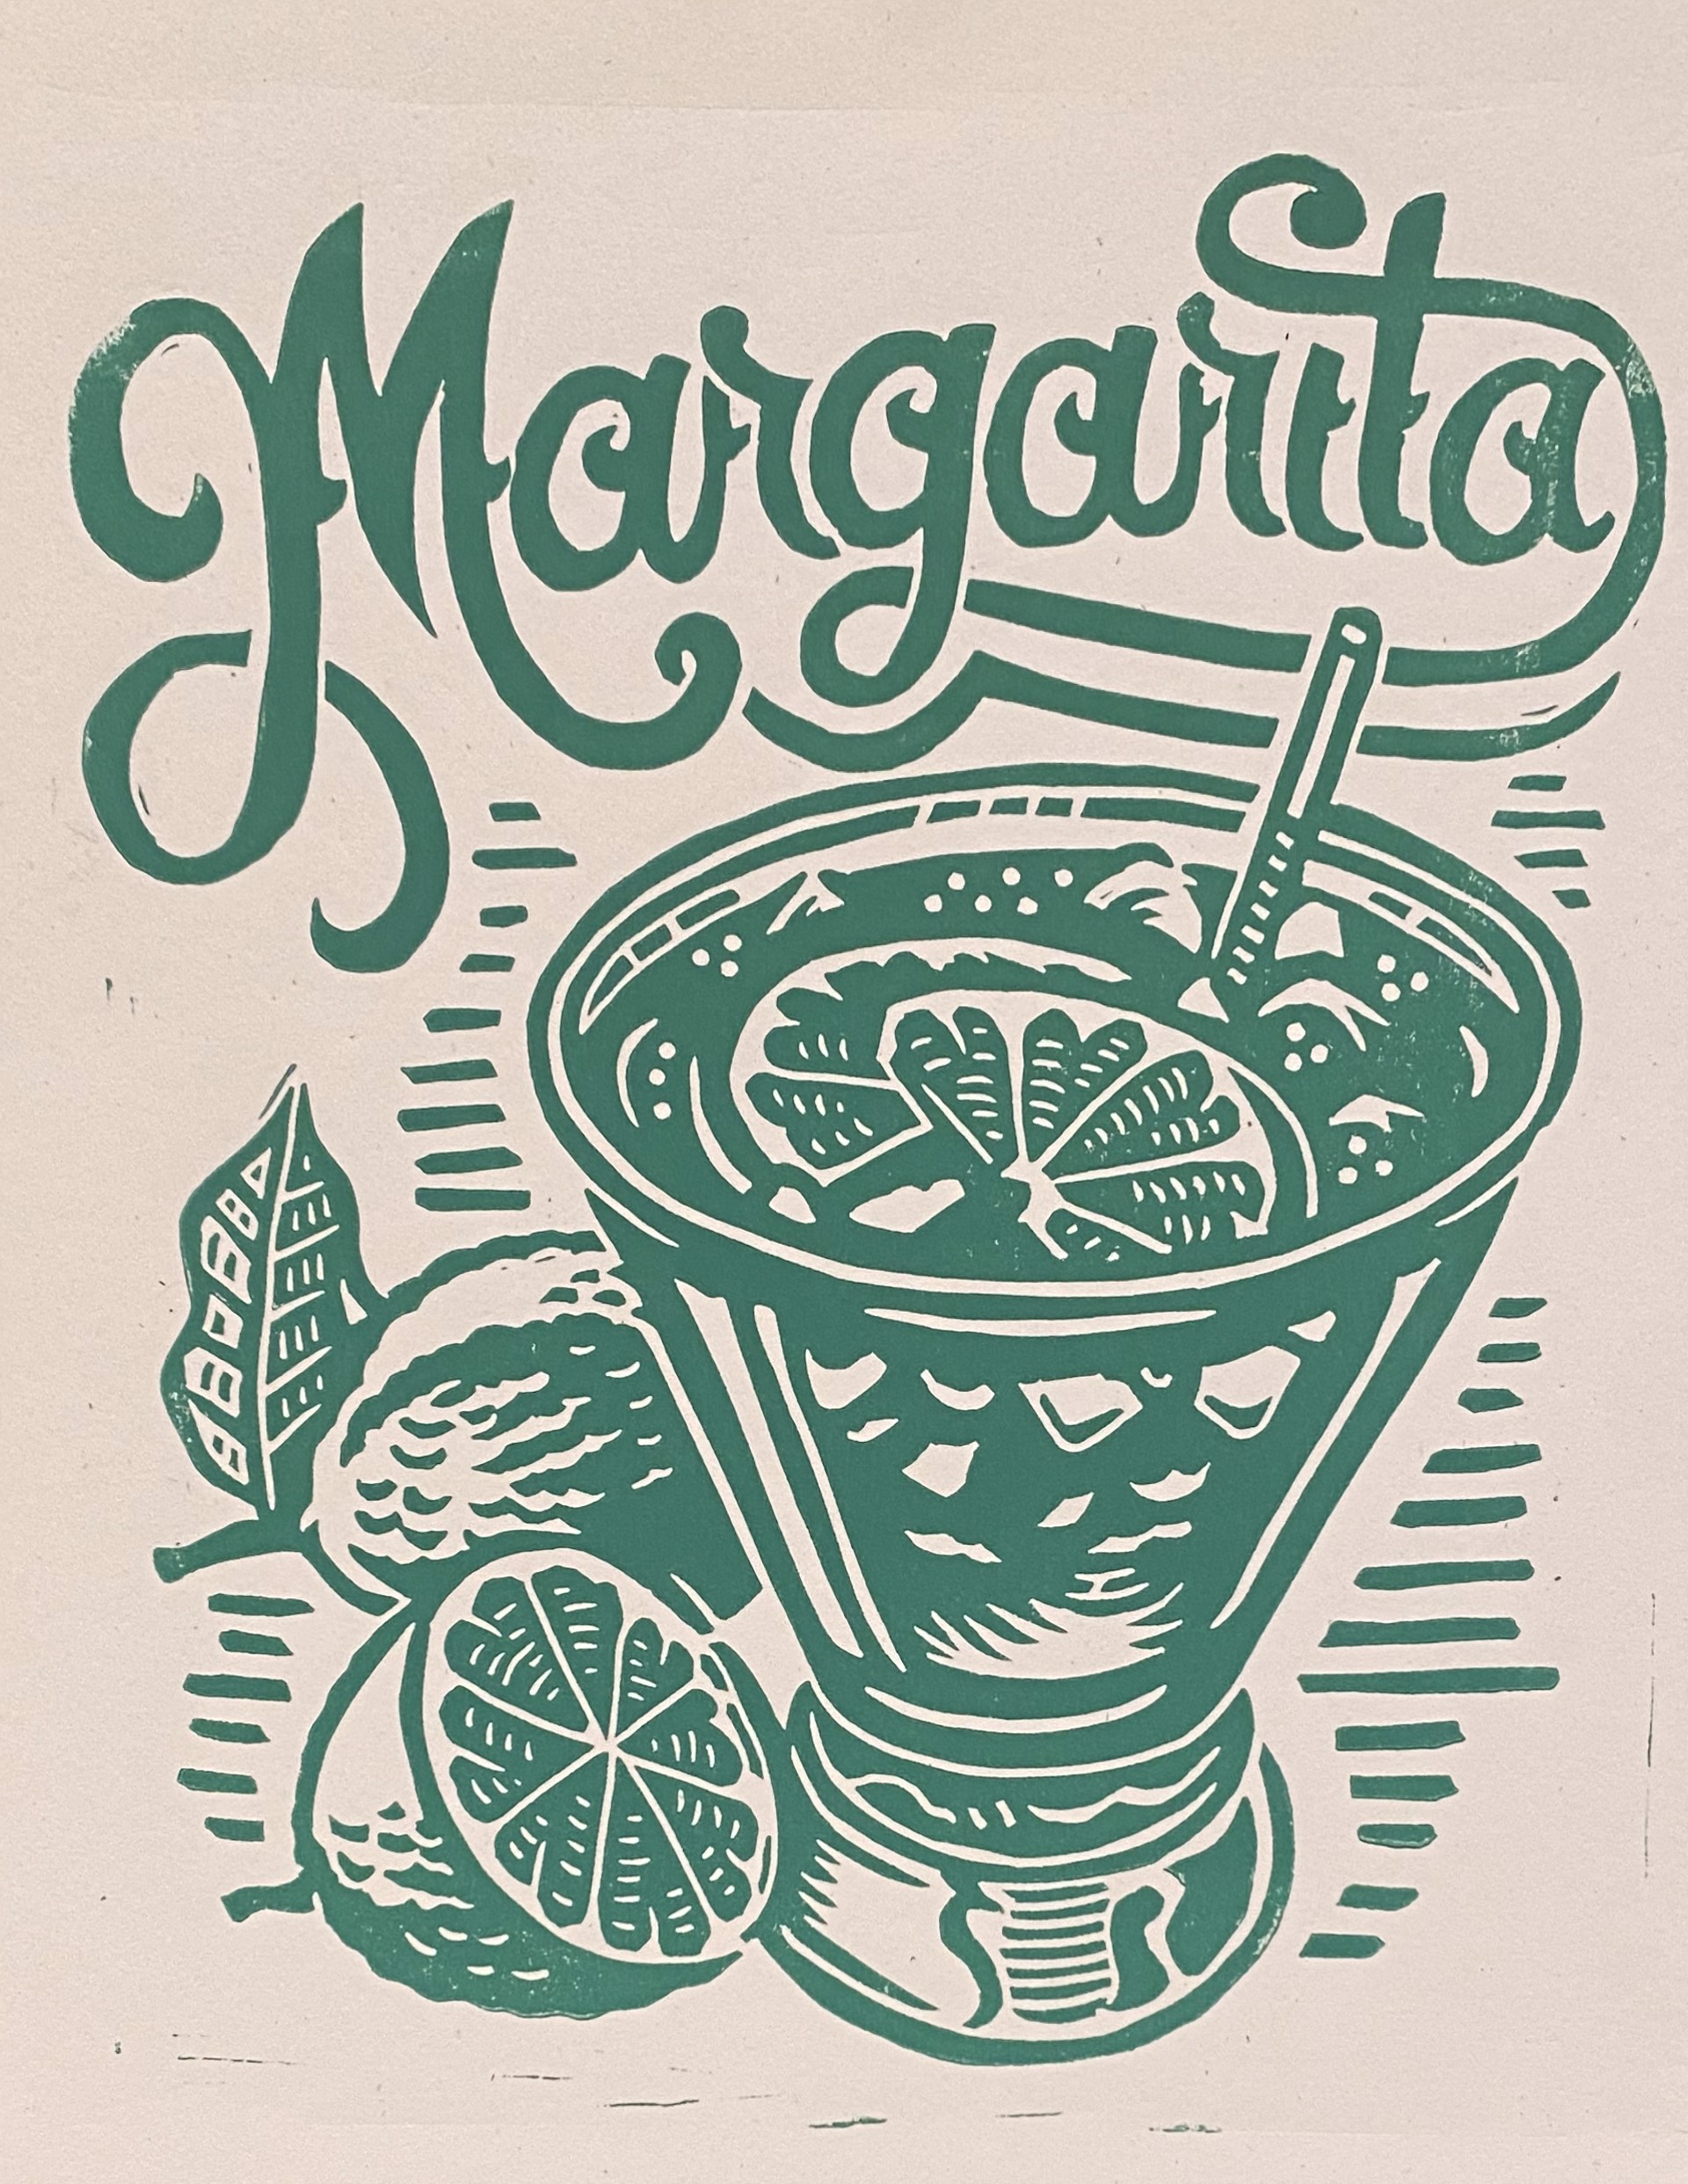 Margarita (Green) by Derrick Castle